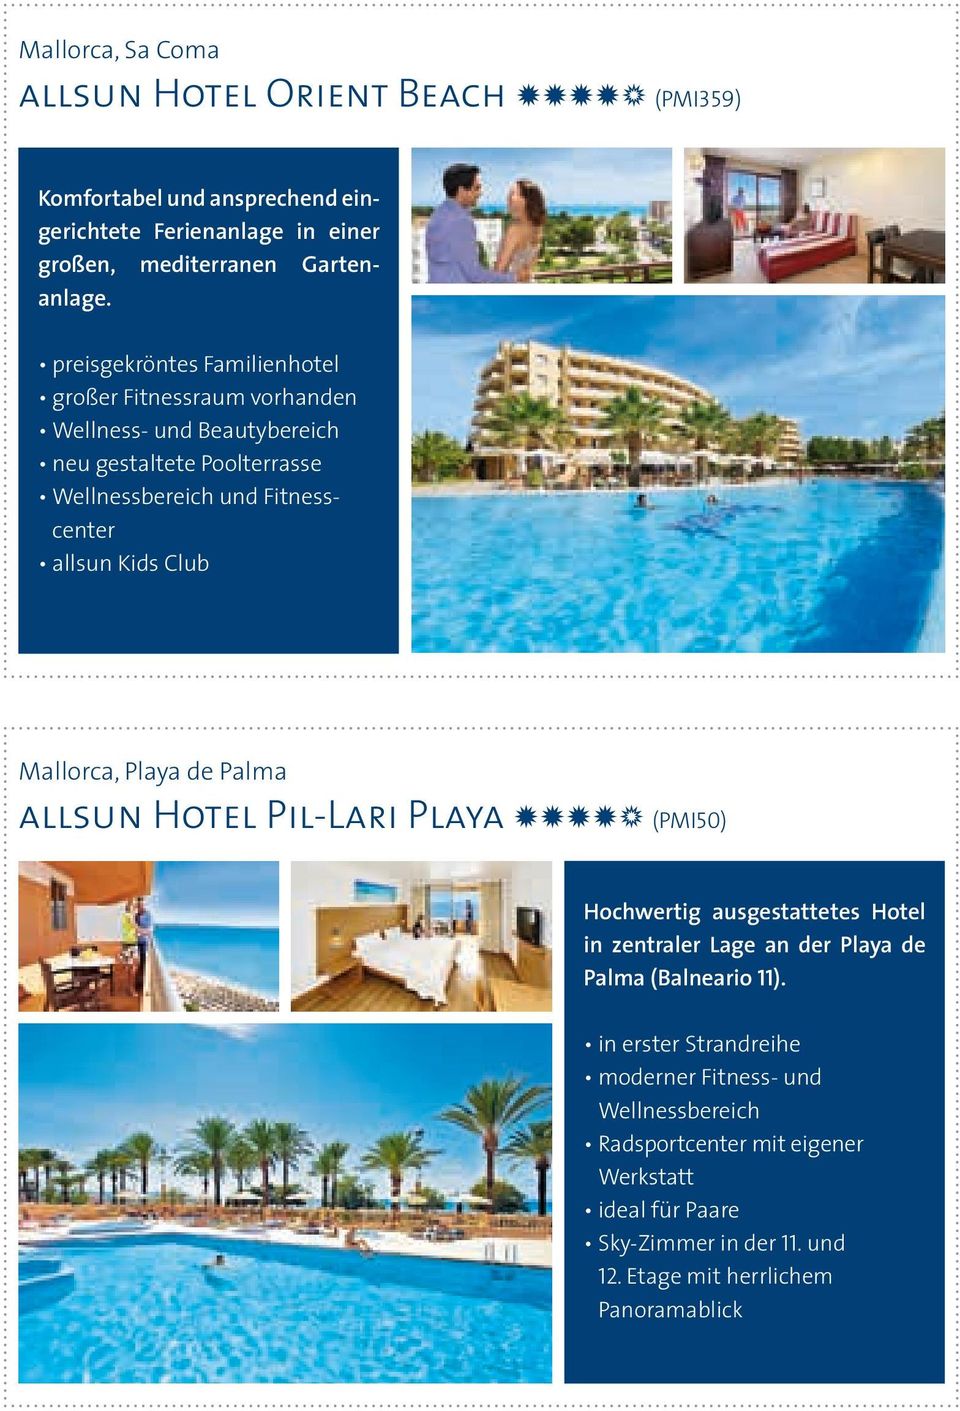 Playa de Palma allsun Hotel Pil-Lari Playa NNNNn (PMI50) Hochwertig ausgestattetes Hotel in zentraler Lage an der Playa de Palma (Balneario 11).